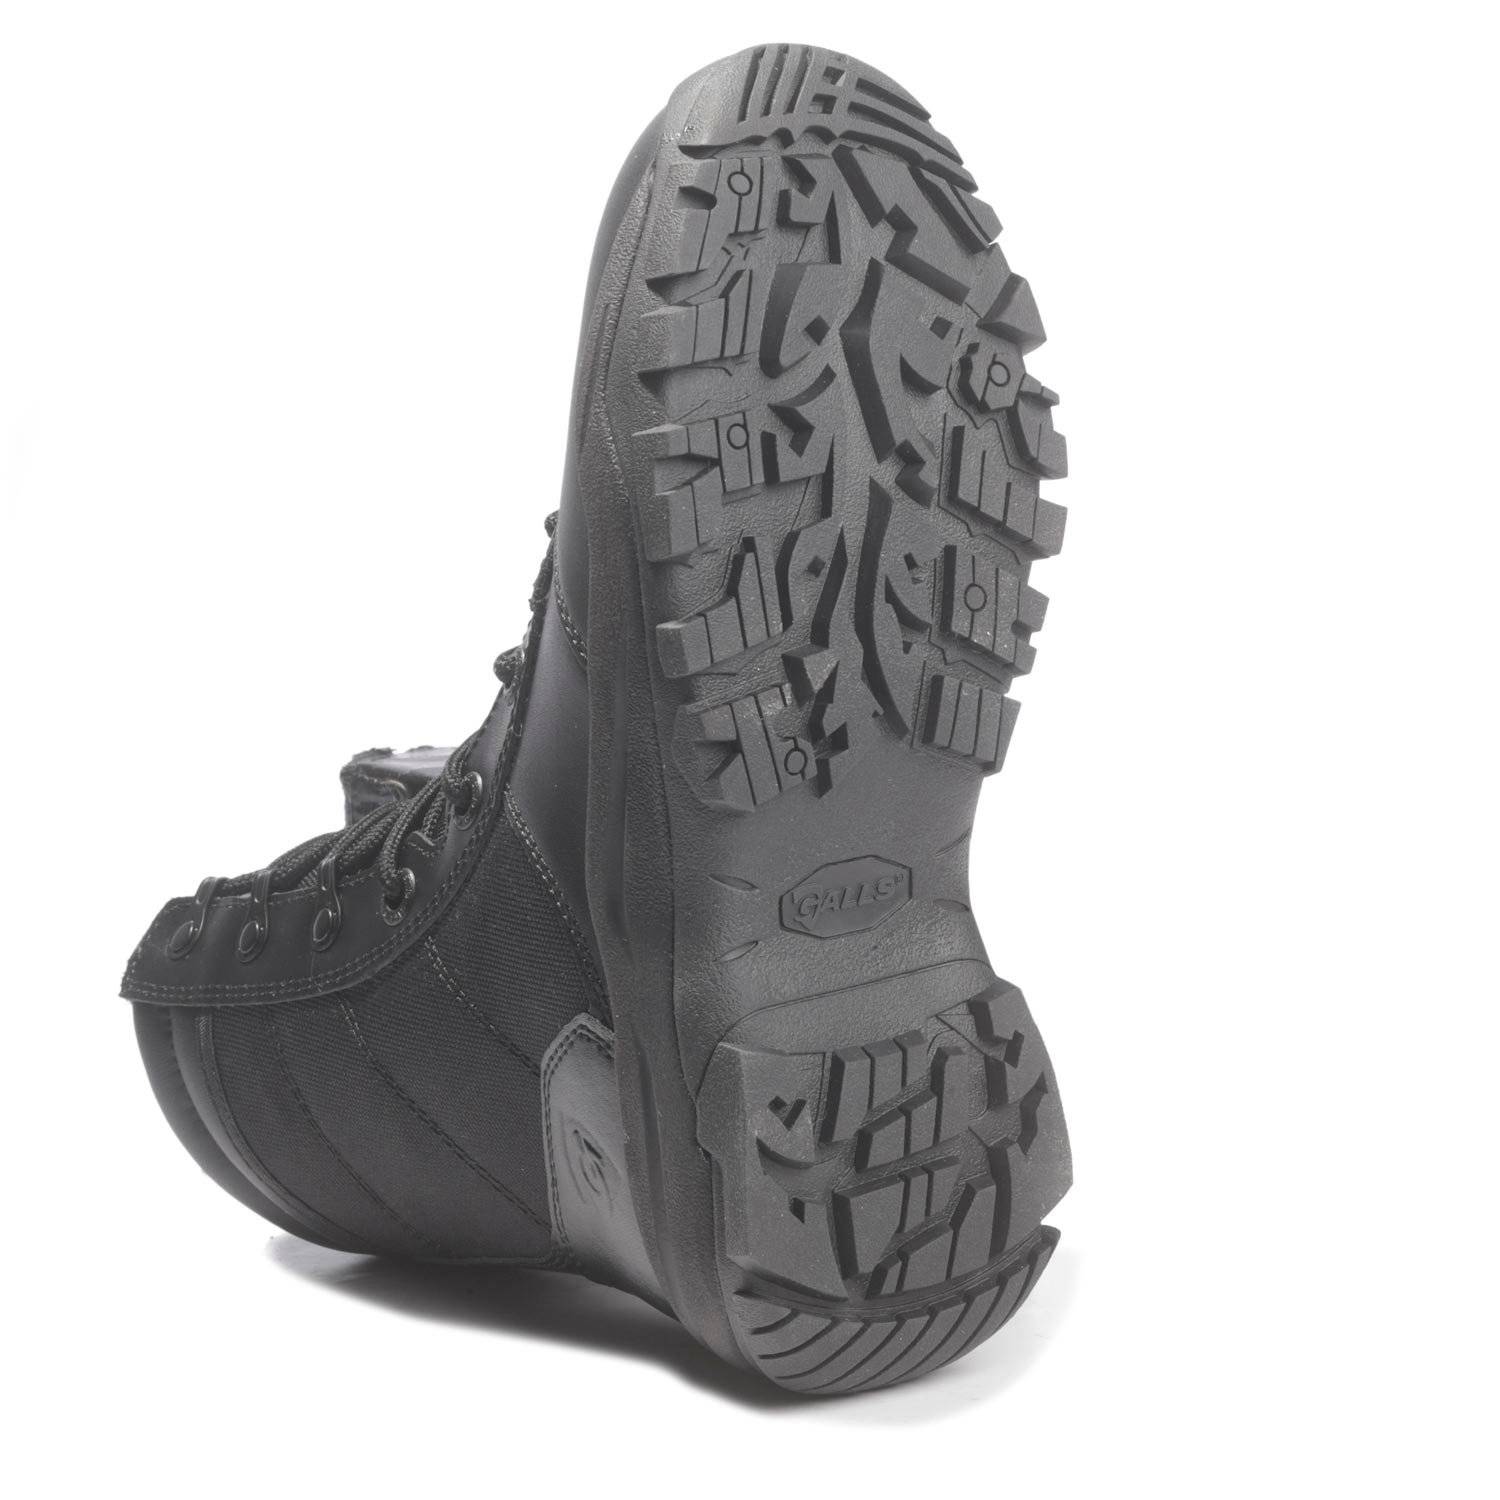 Galls Women's 8” Side Zip Boots | Duty Boots